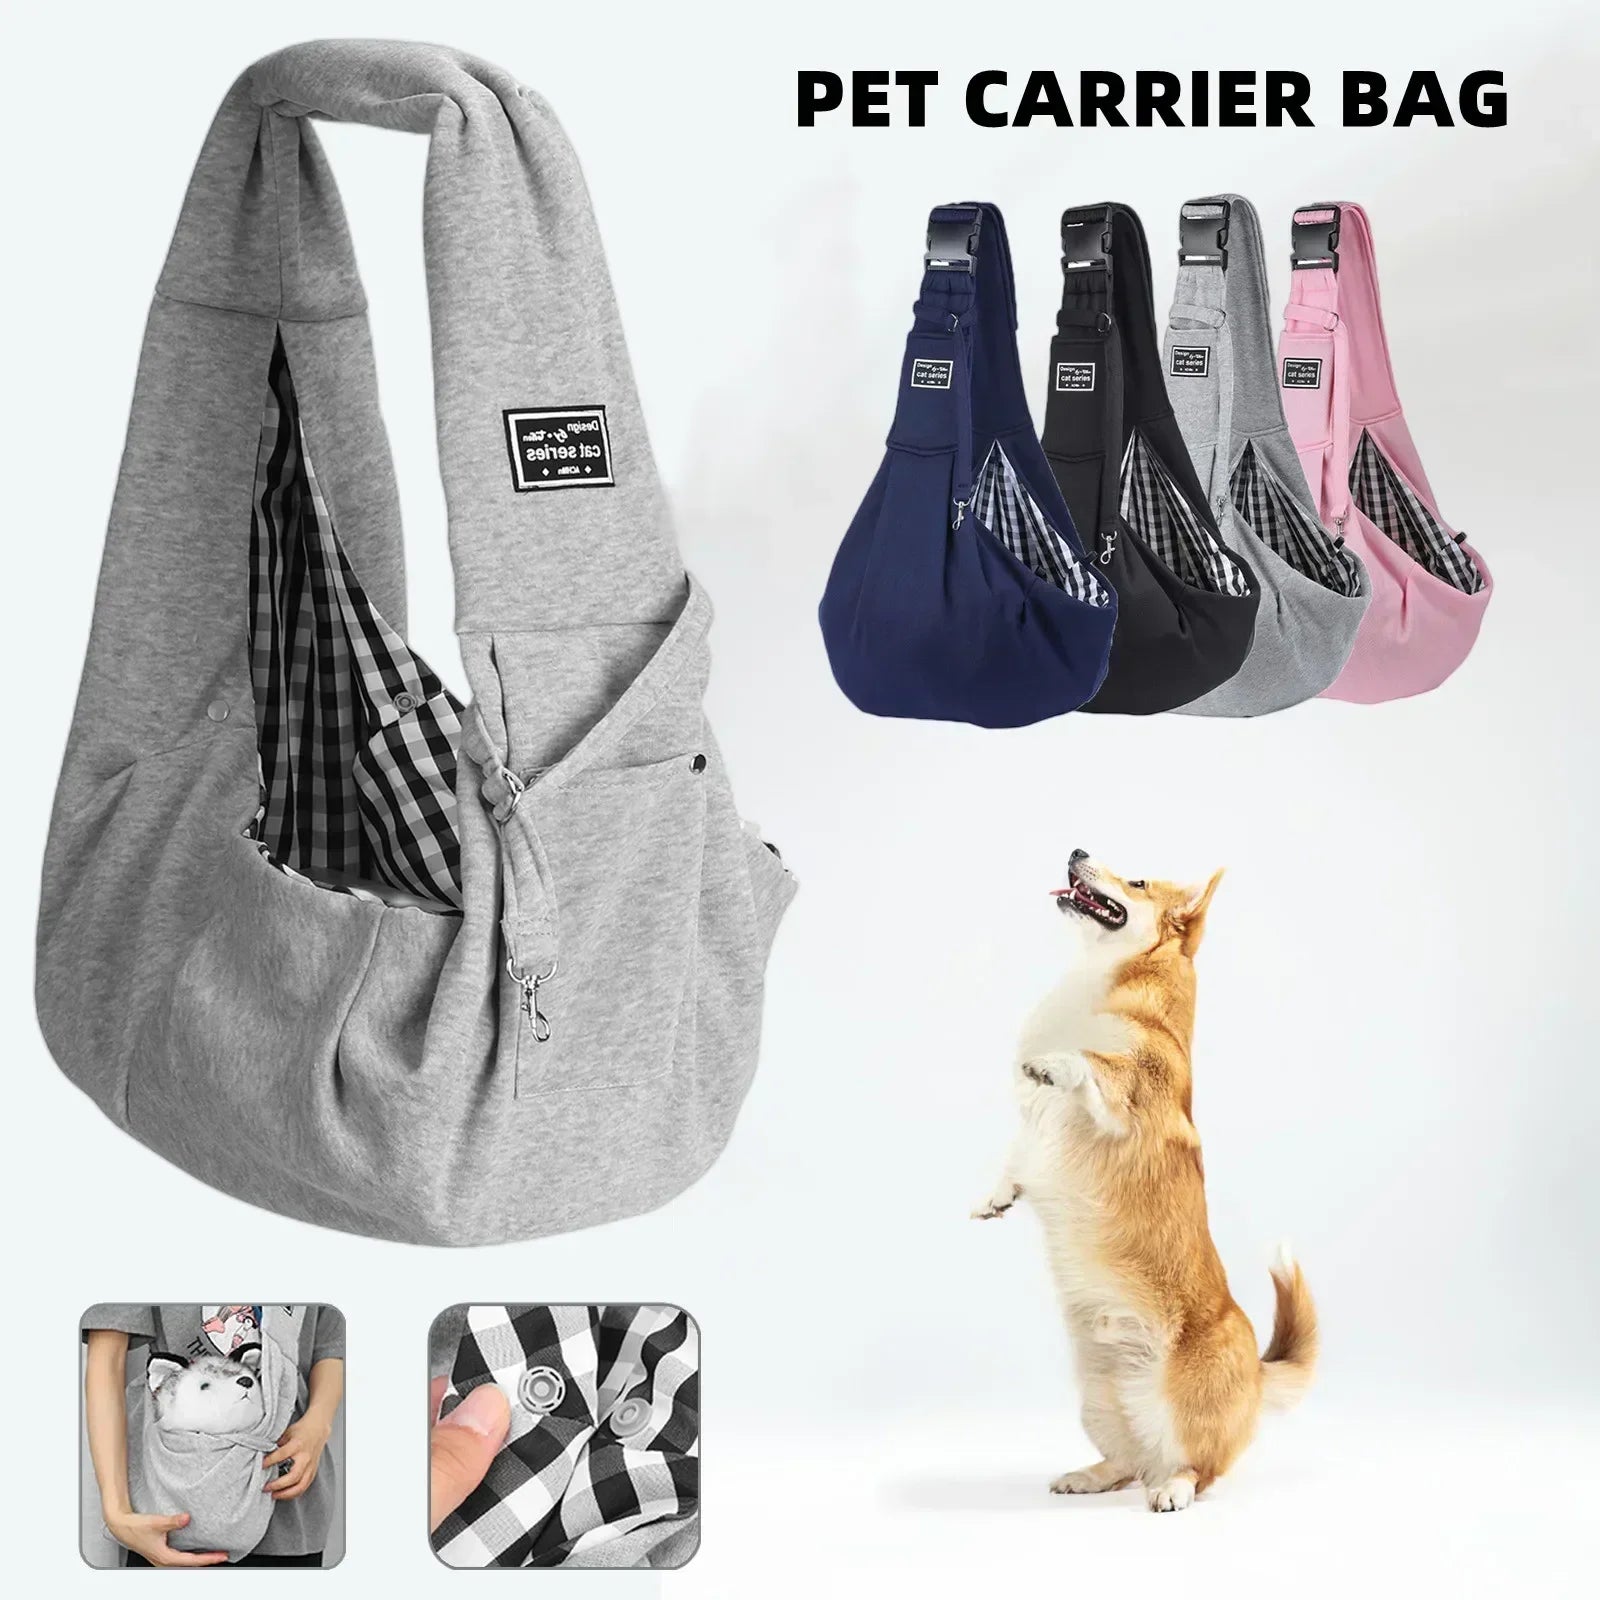 Portable Pet Shoulder Sling Bag: Stylish Windproof Design for Outdoor Adventures  ourlum.com   